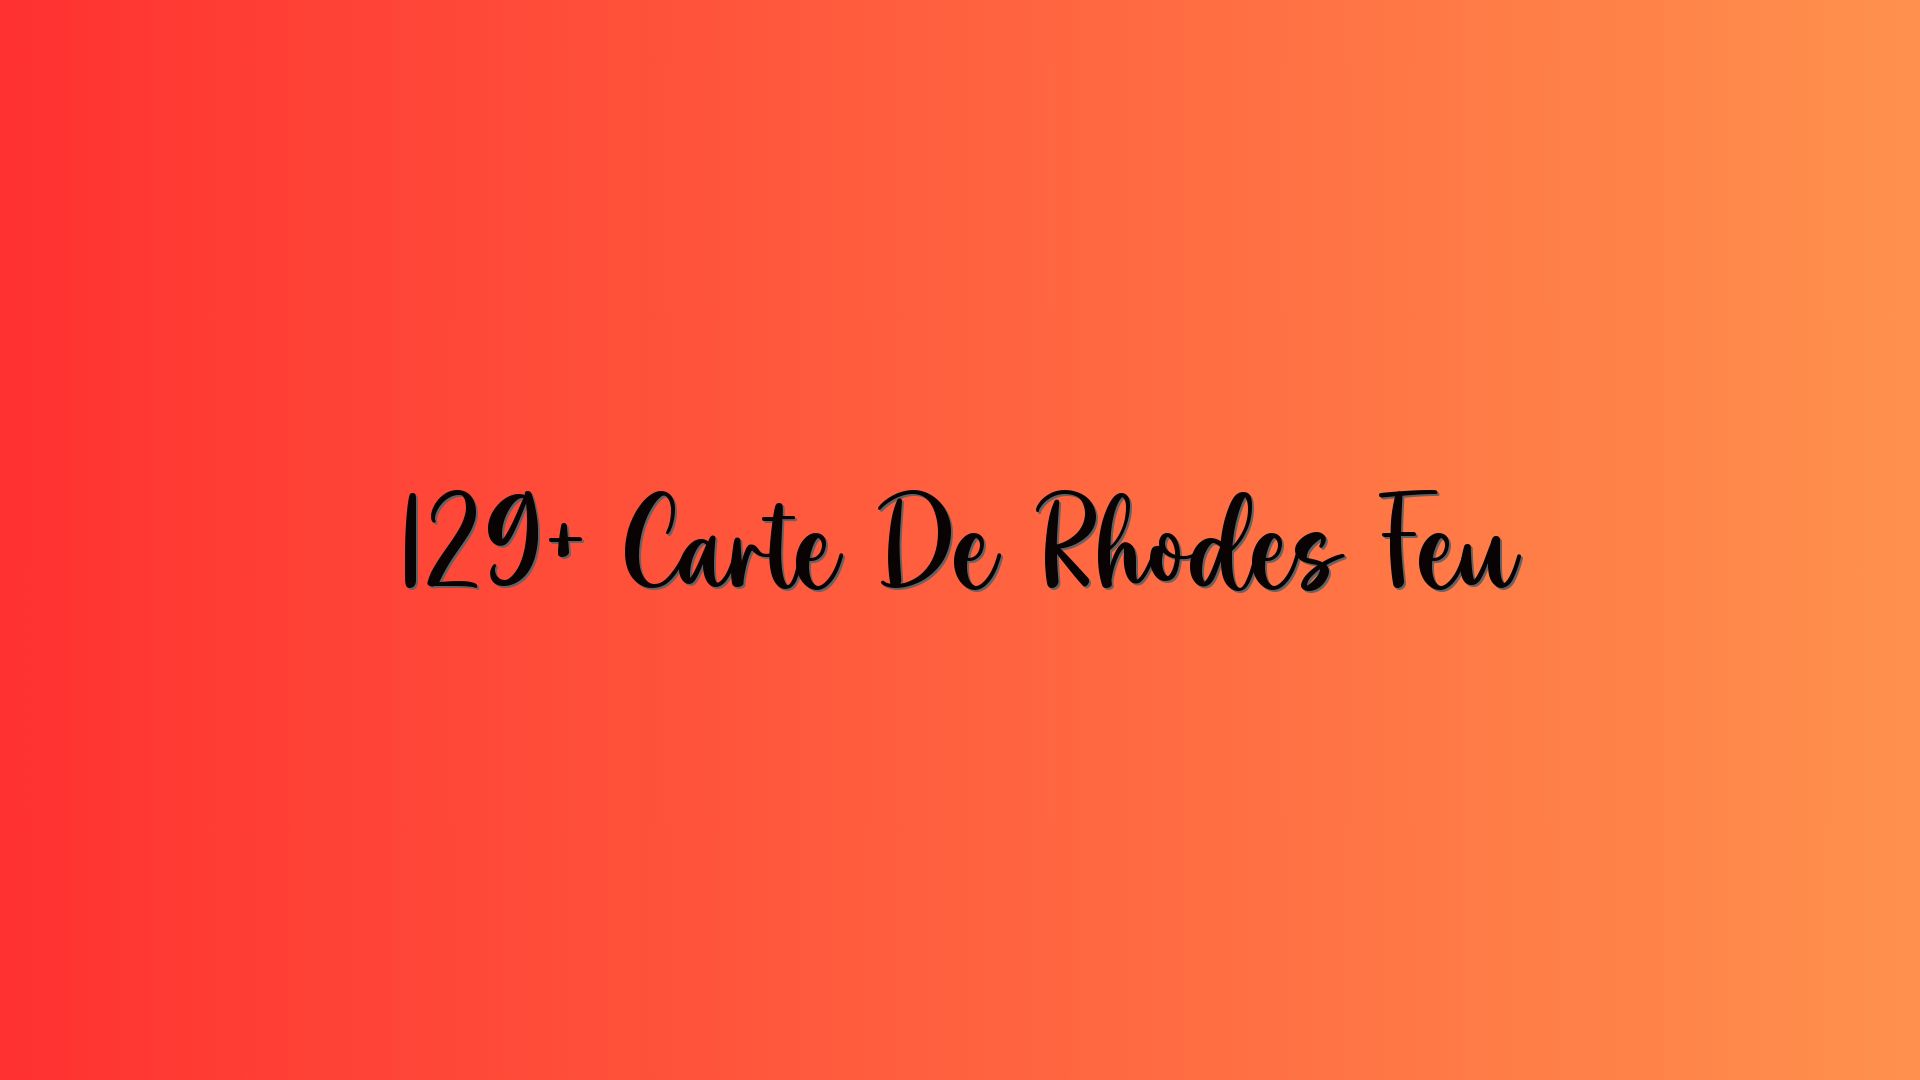 129+ Carte De Rhodes Feu